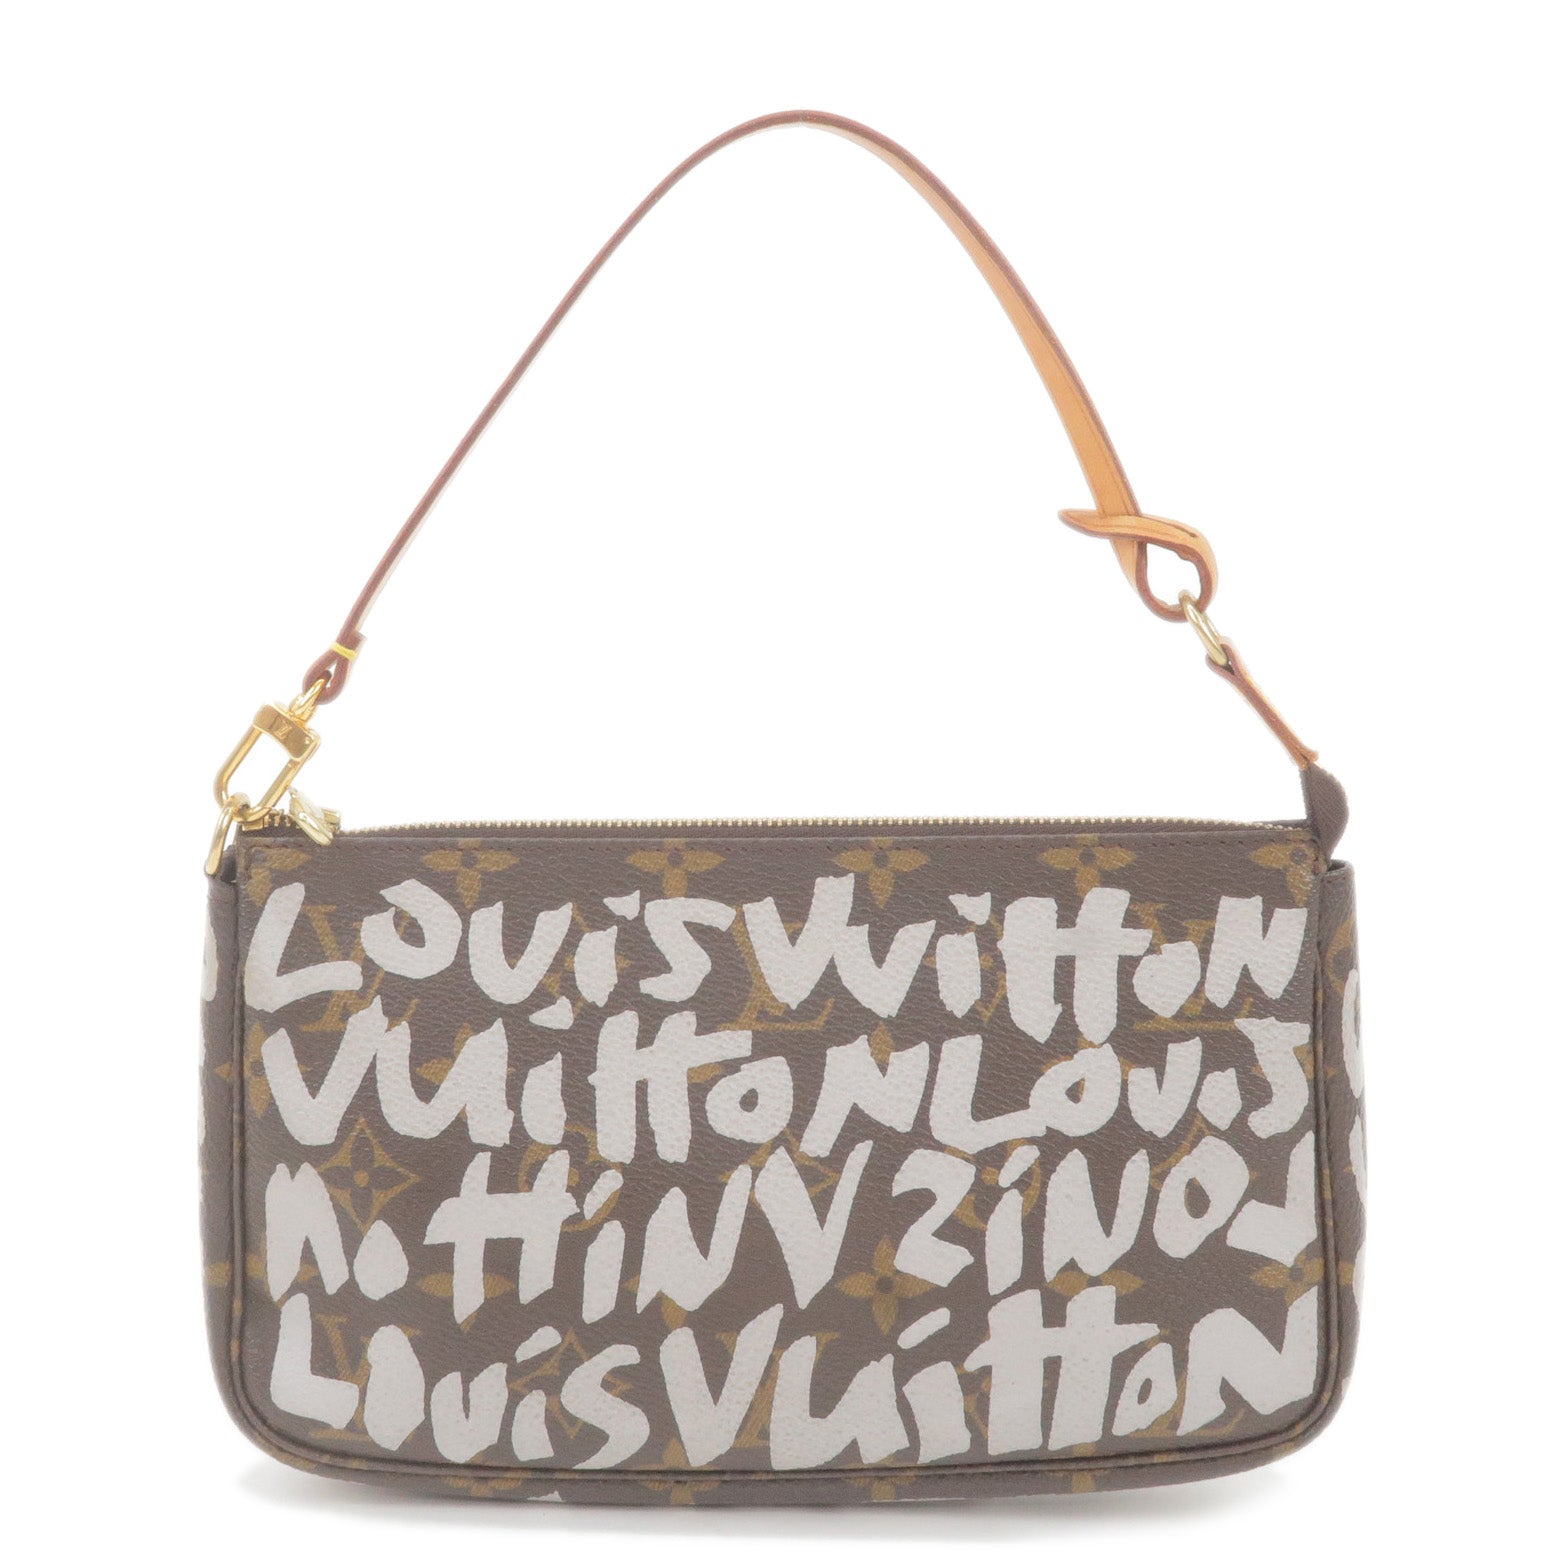 Louis Vuitton, Bags, Looking For Louis Vuitton Graffiti Bags